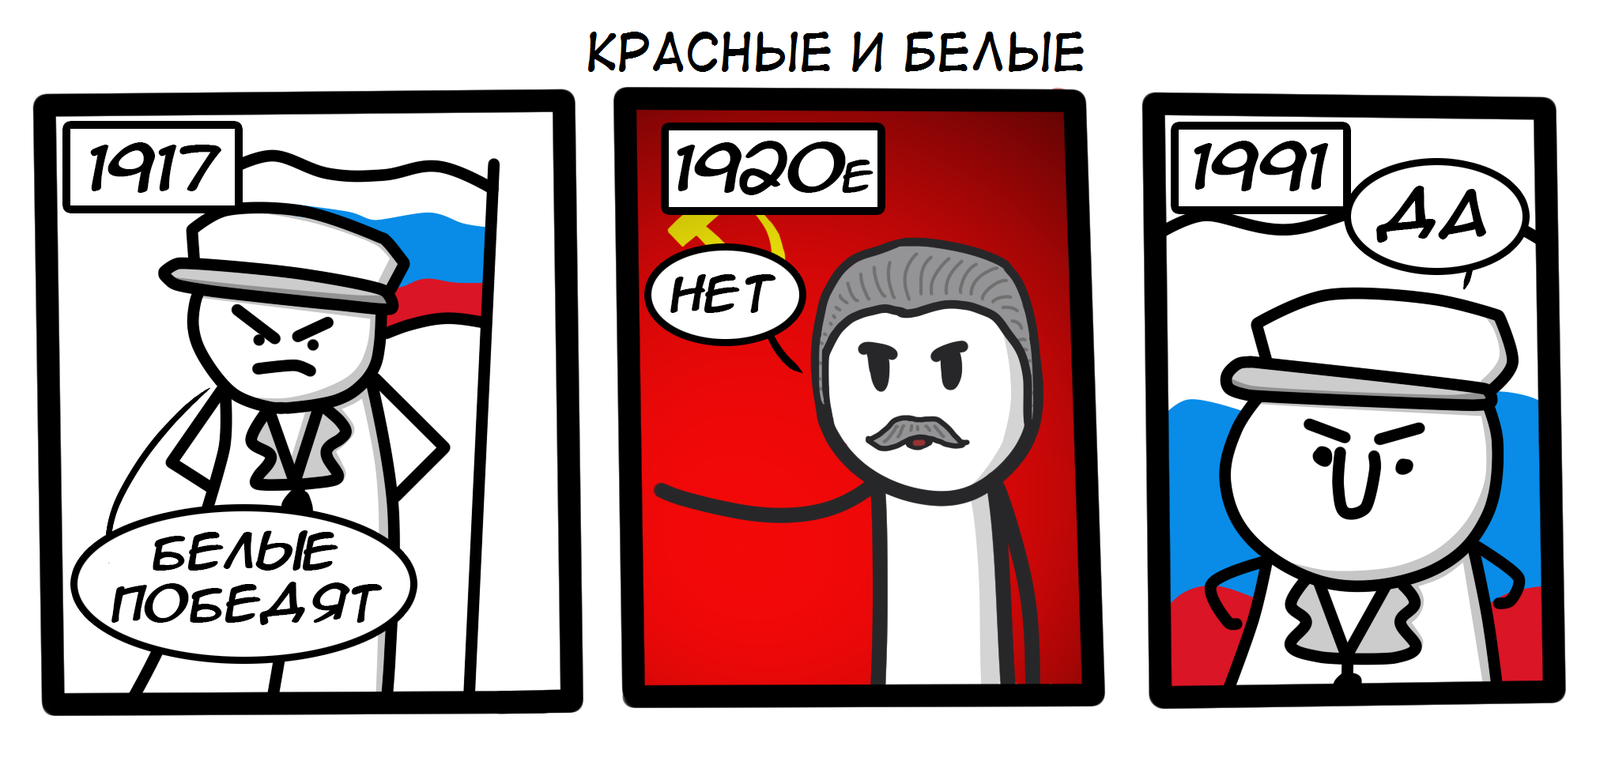 Red and White. - My, Comics, Politics, the USSR, Stalin, Story, История России